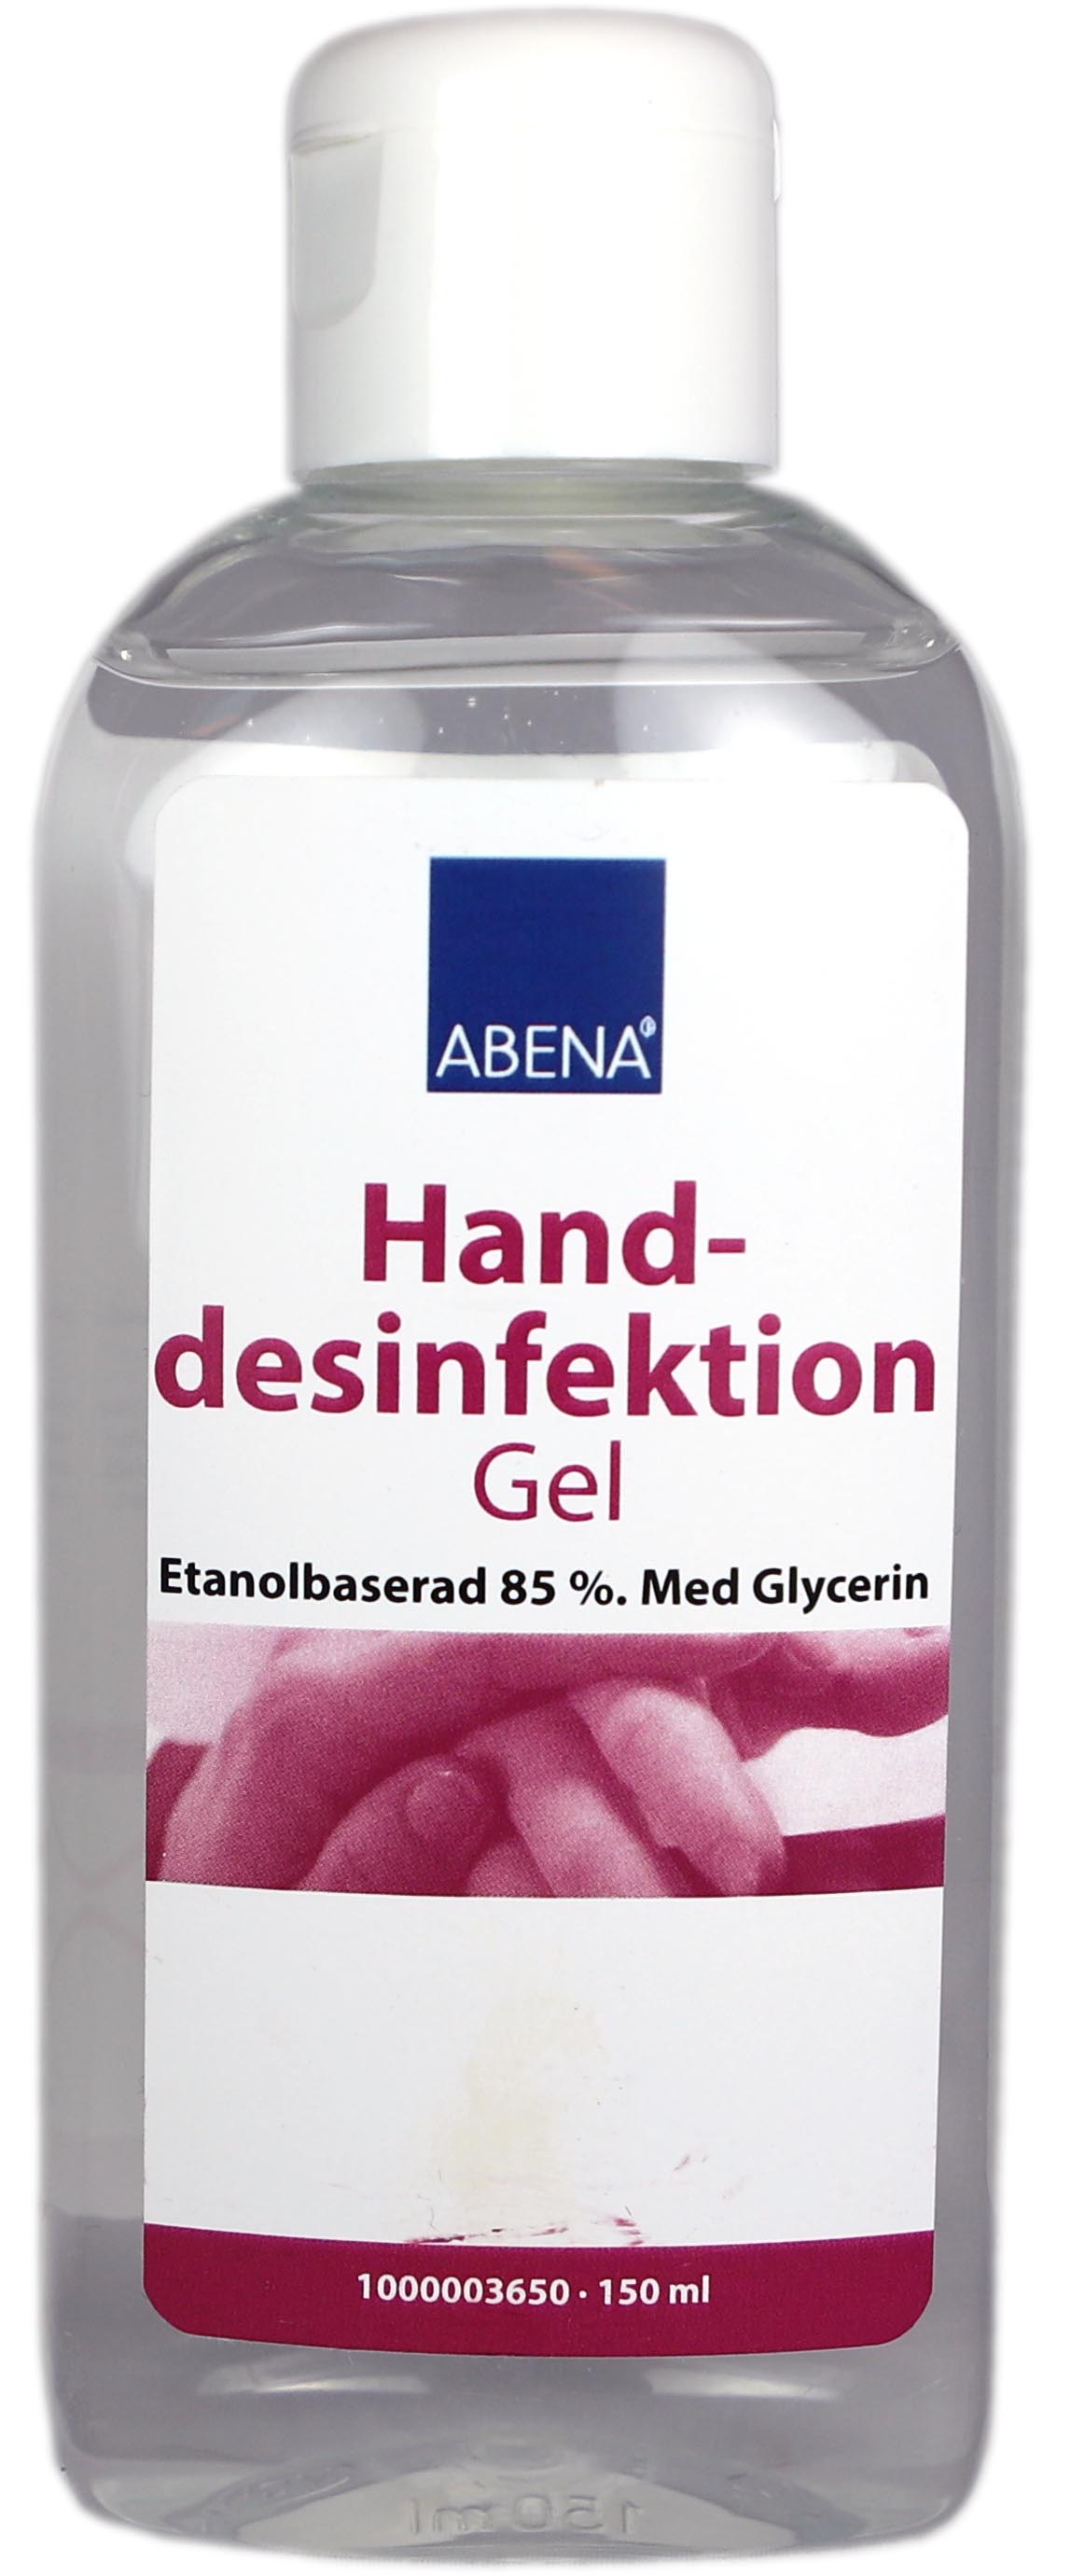 Handdesinfektion Abena Gel 85% 150ml 51010162